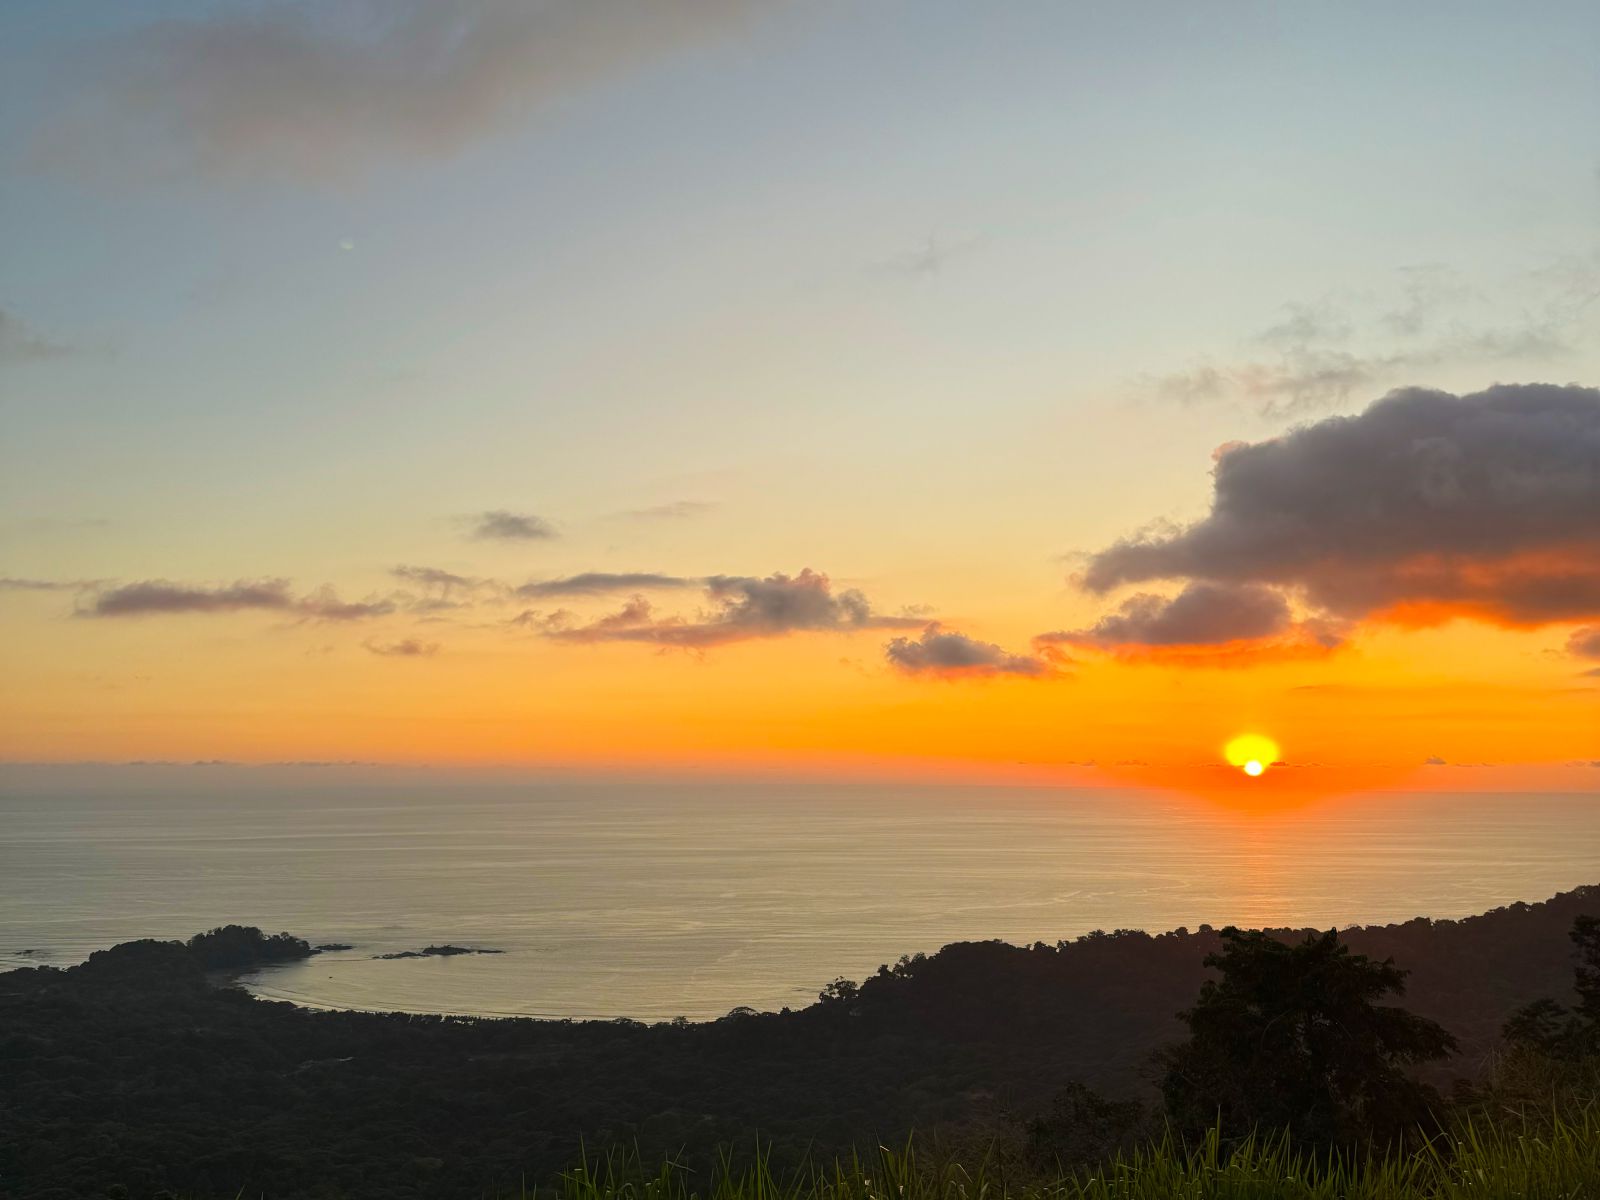 Sunset View of the Punta Dominial Bay from Hacienda Ébano